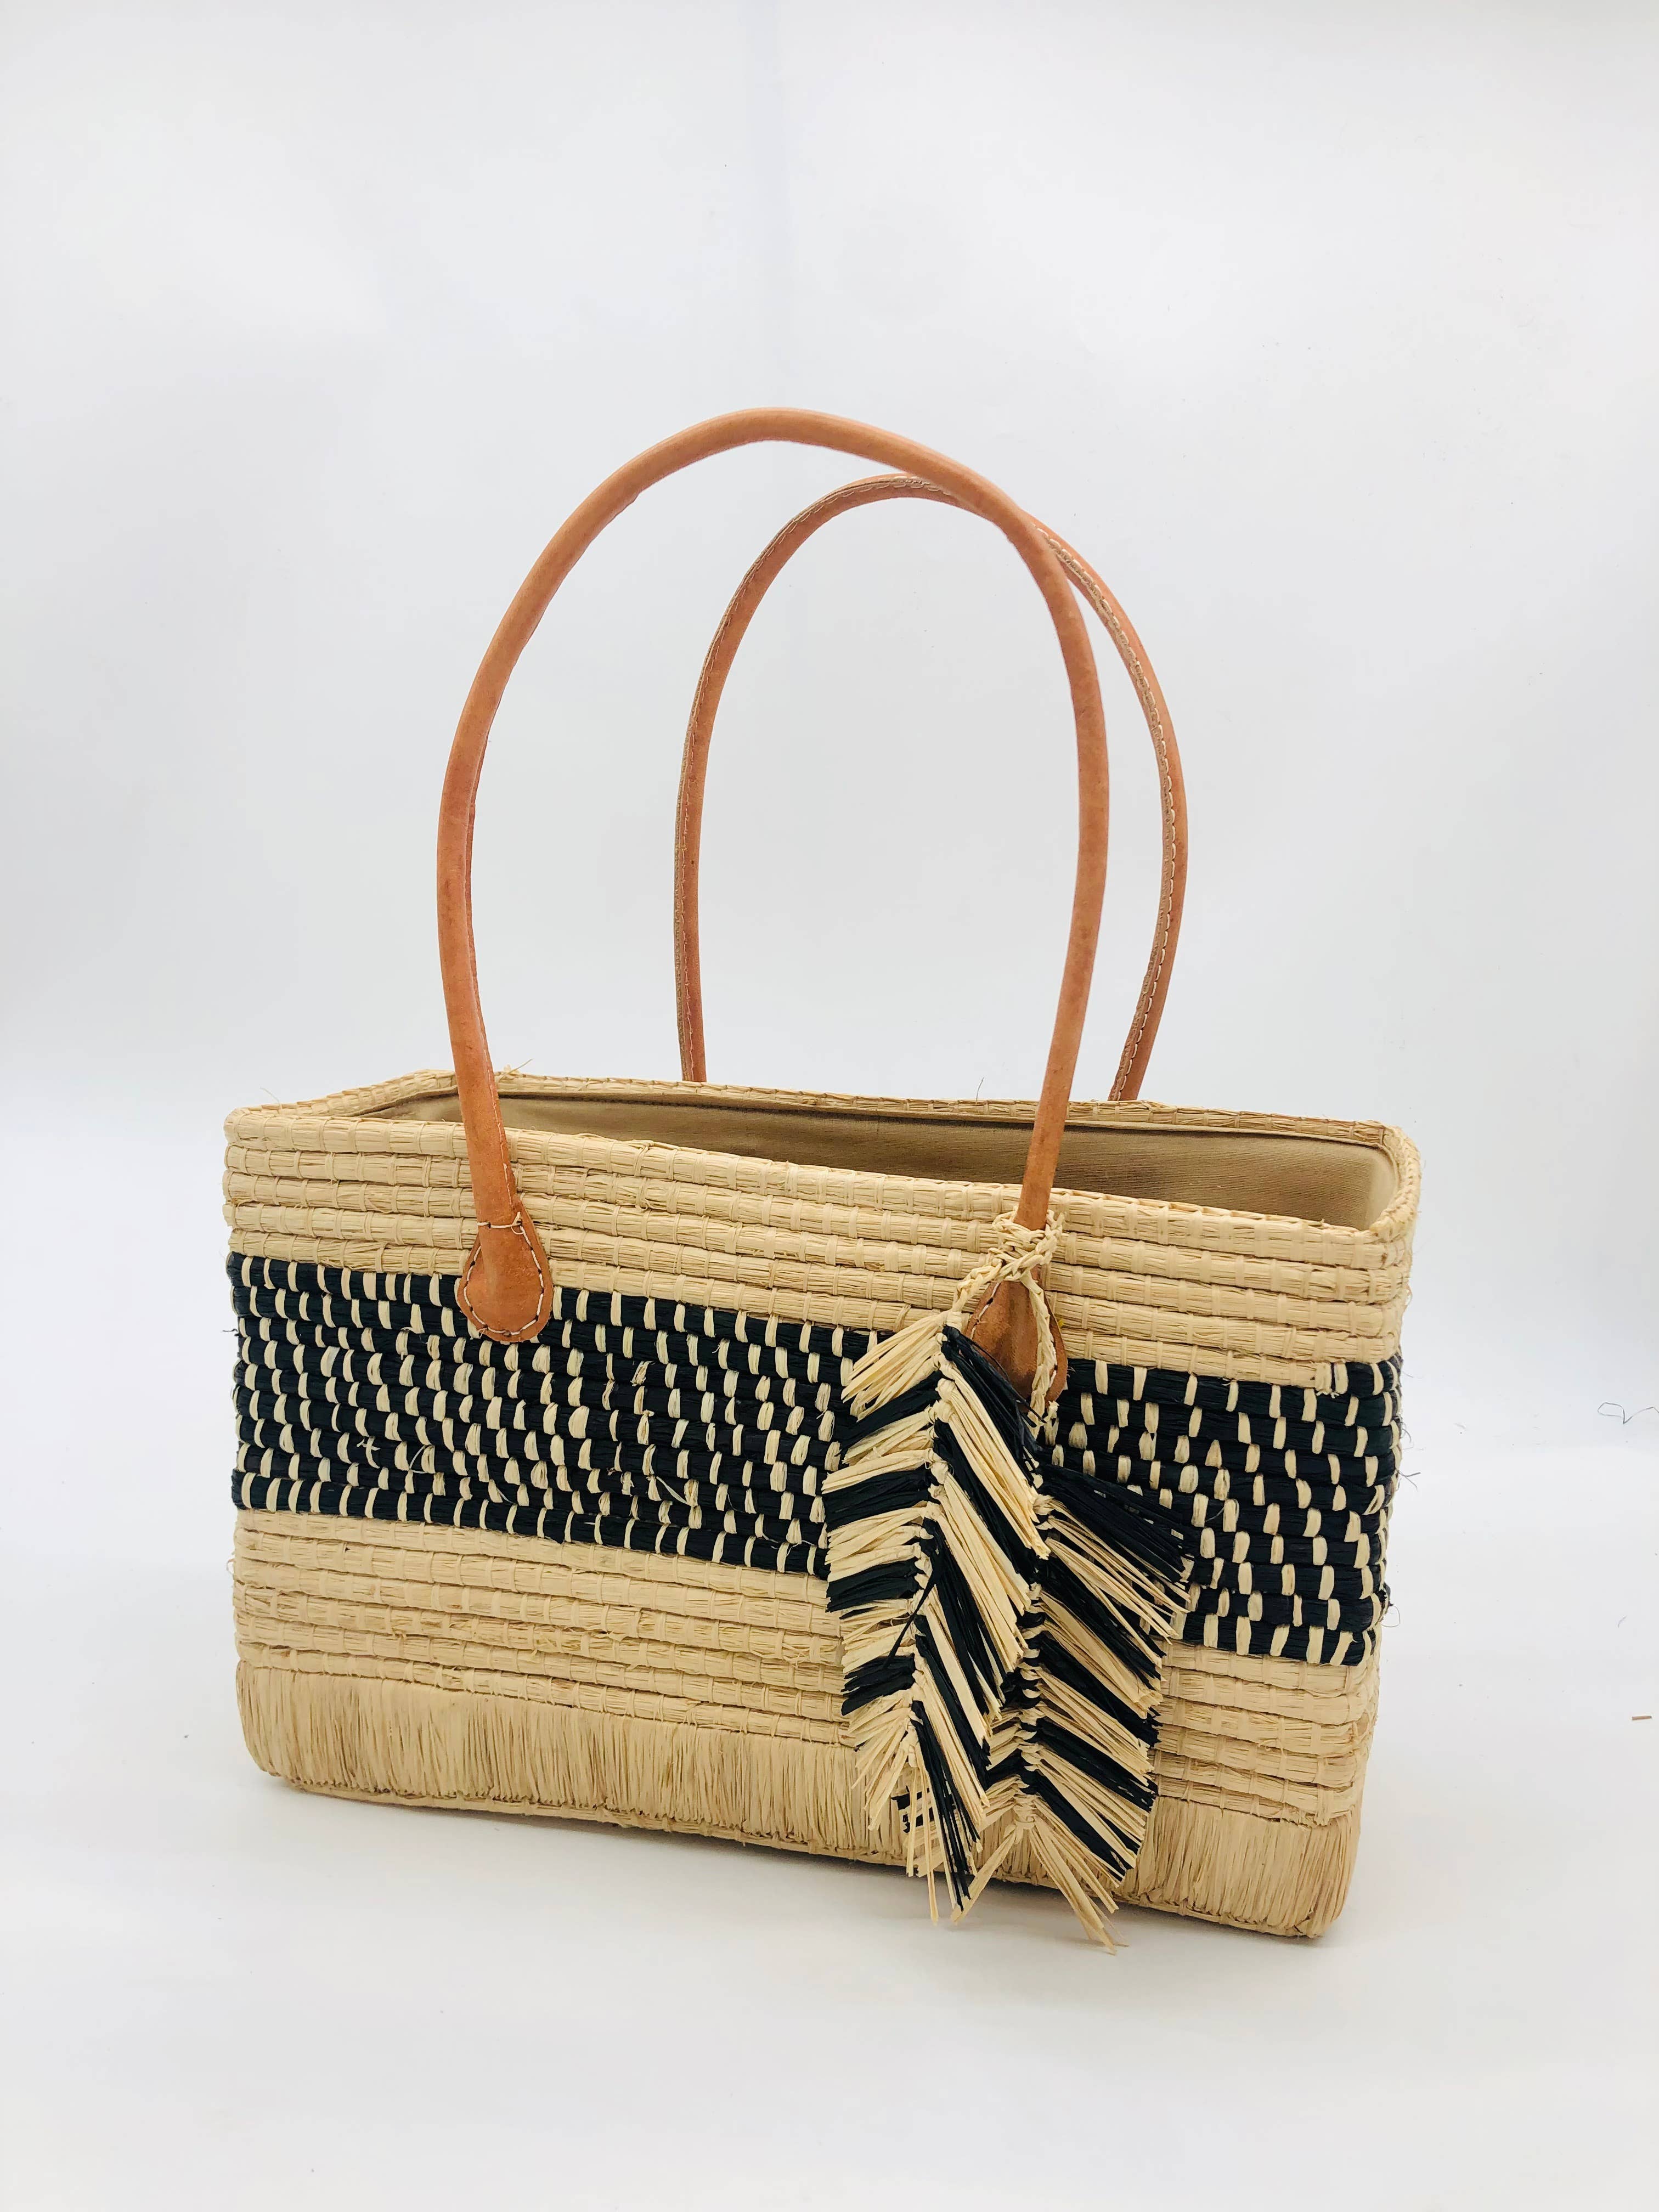 Melanga Straw Tote Bag with Waterfall Pompoms Charm Embellishment